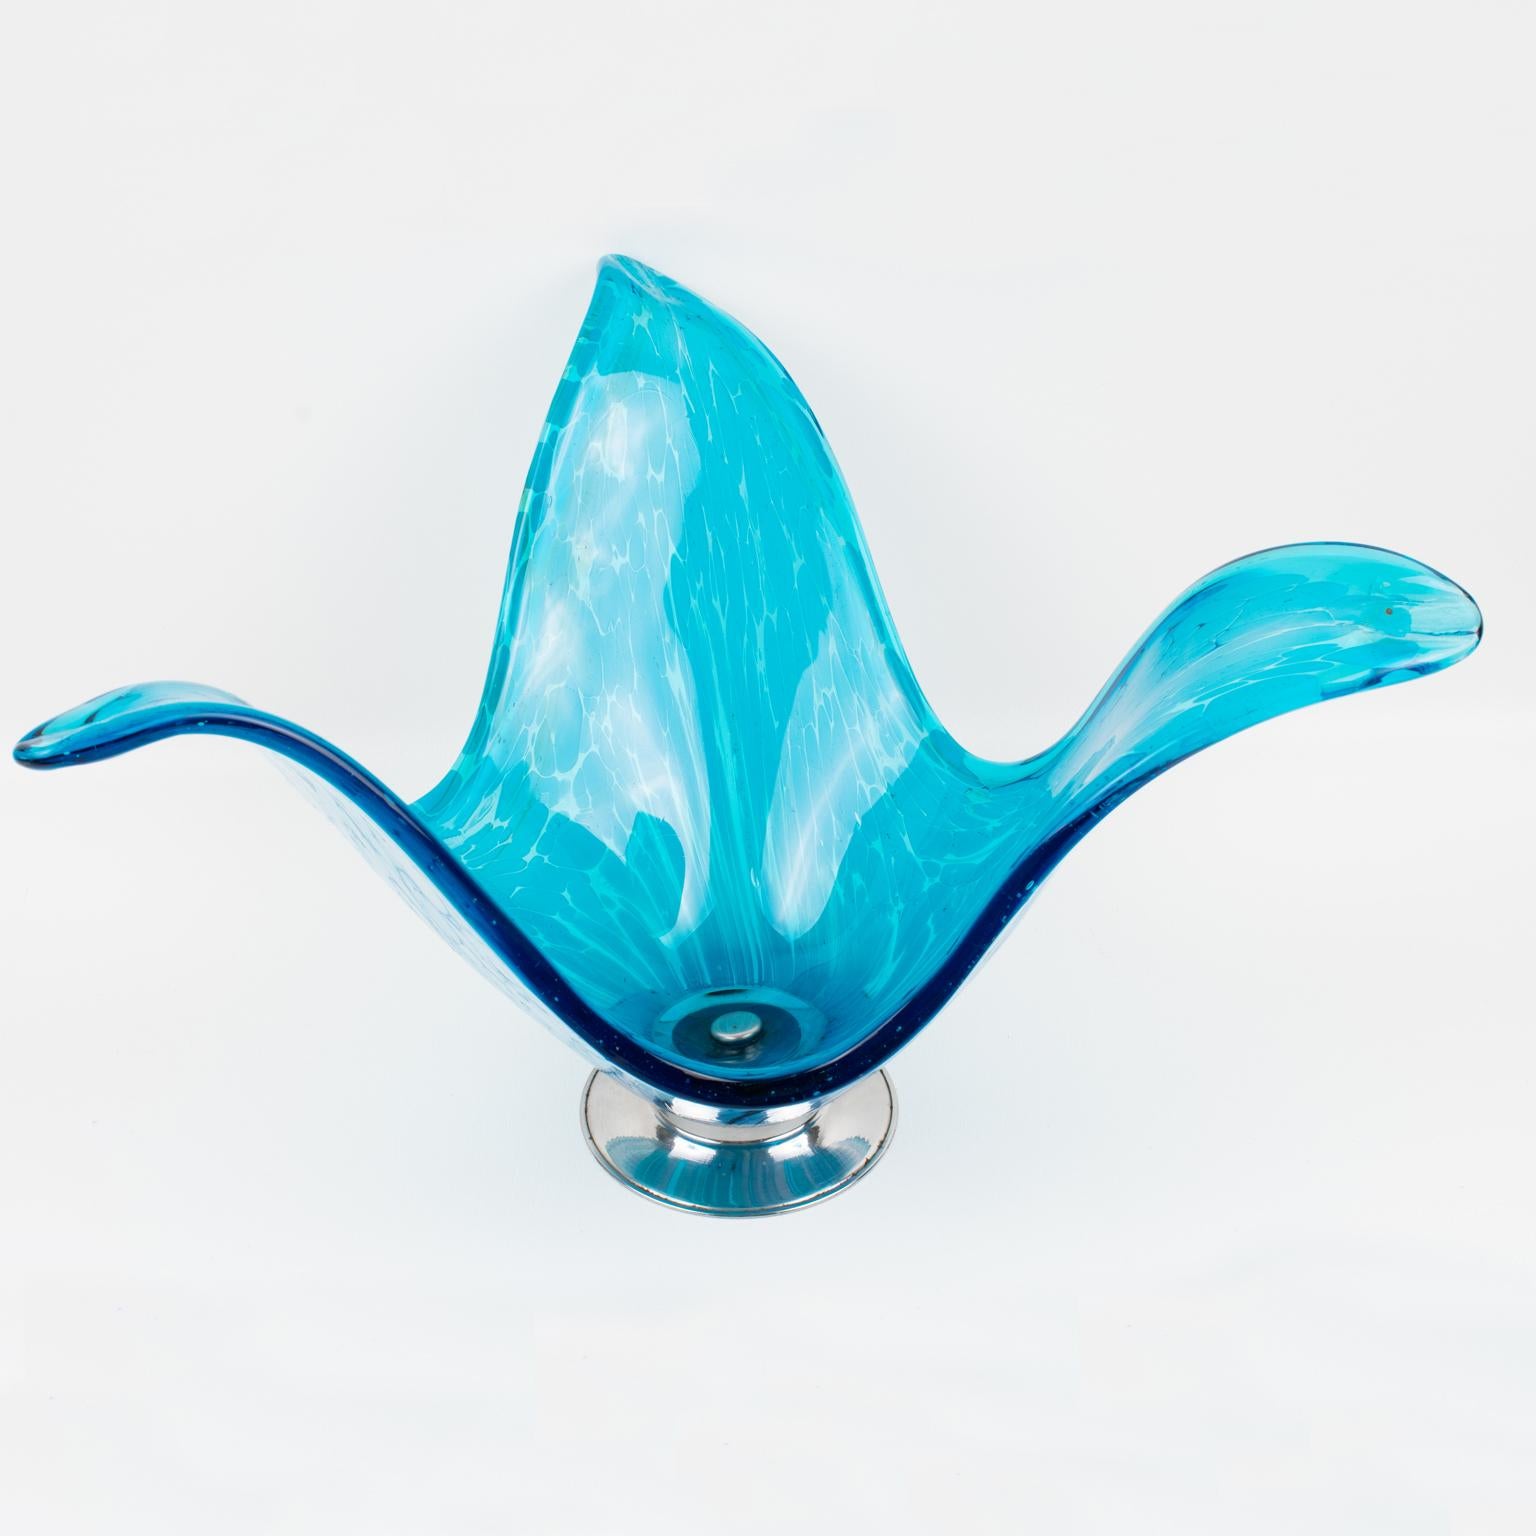 Modern Italian Art Glass Murano Blue and White Sculptural Bowl Vase Centerpiece